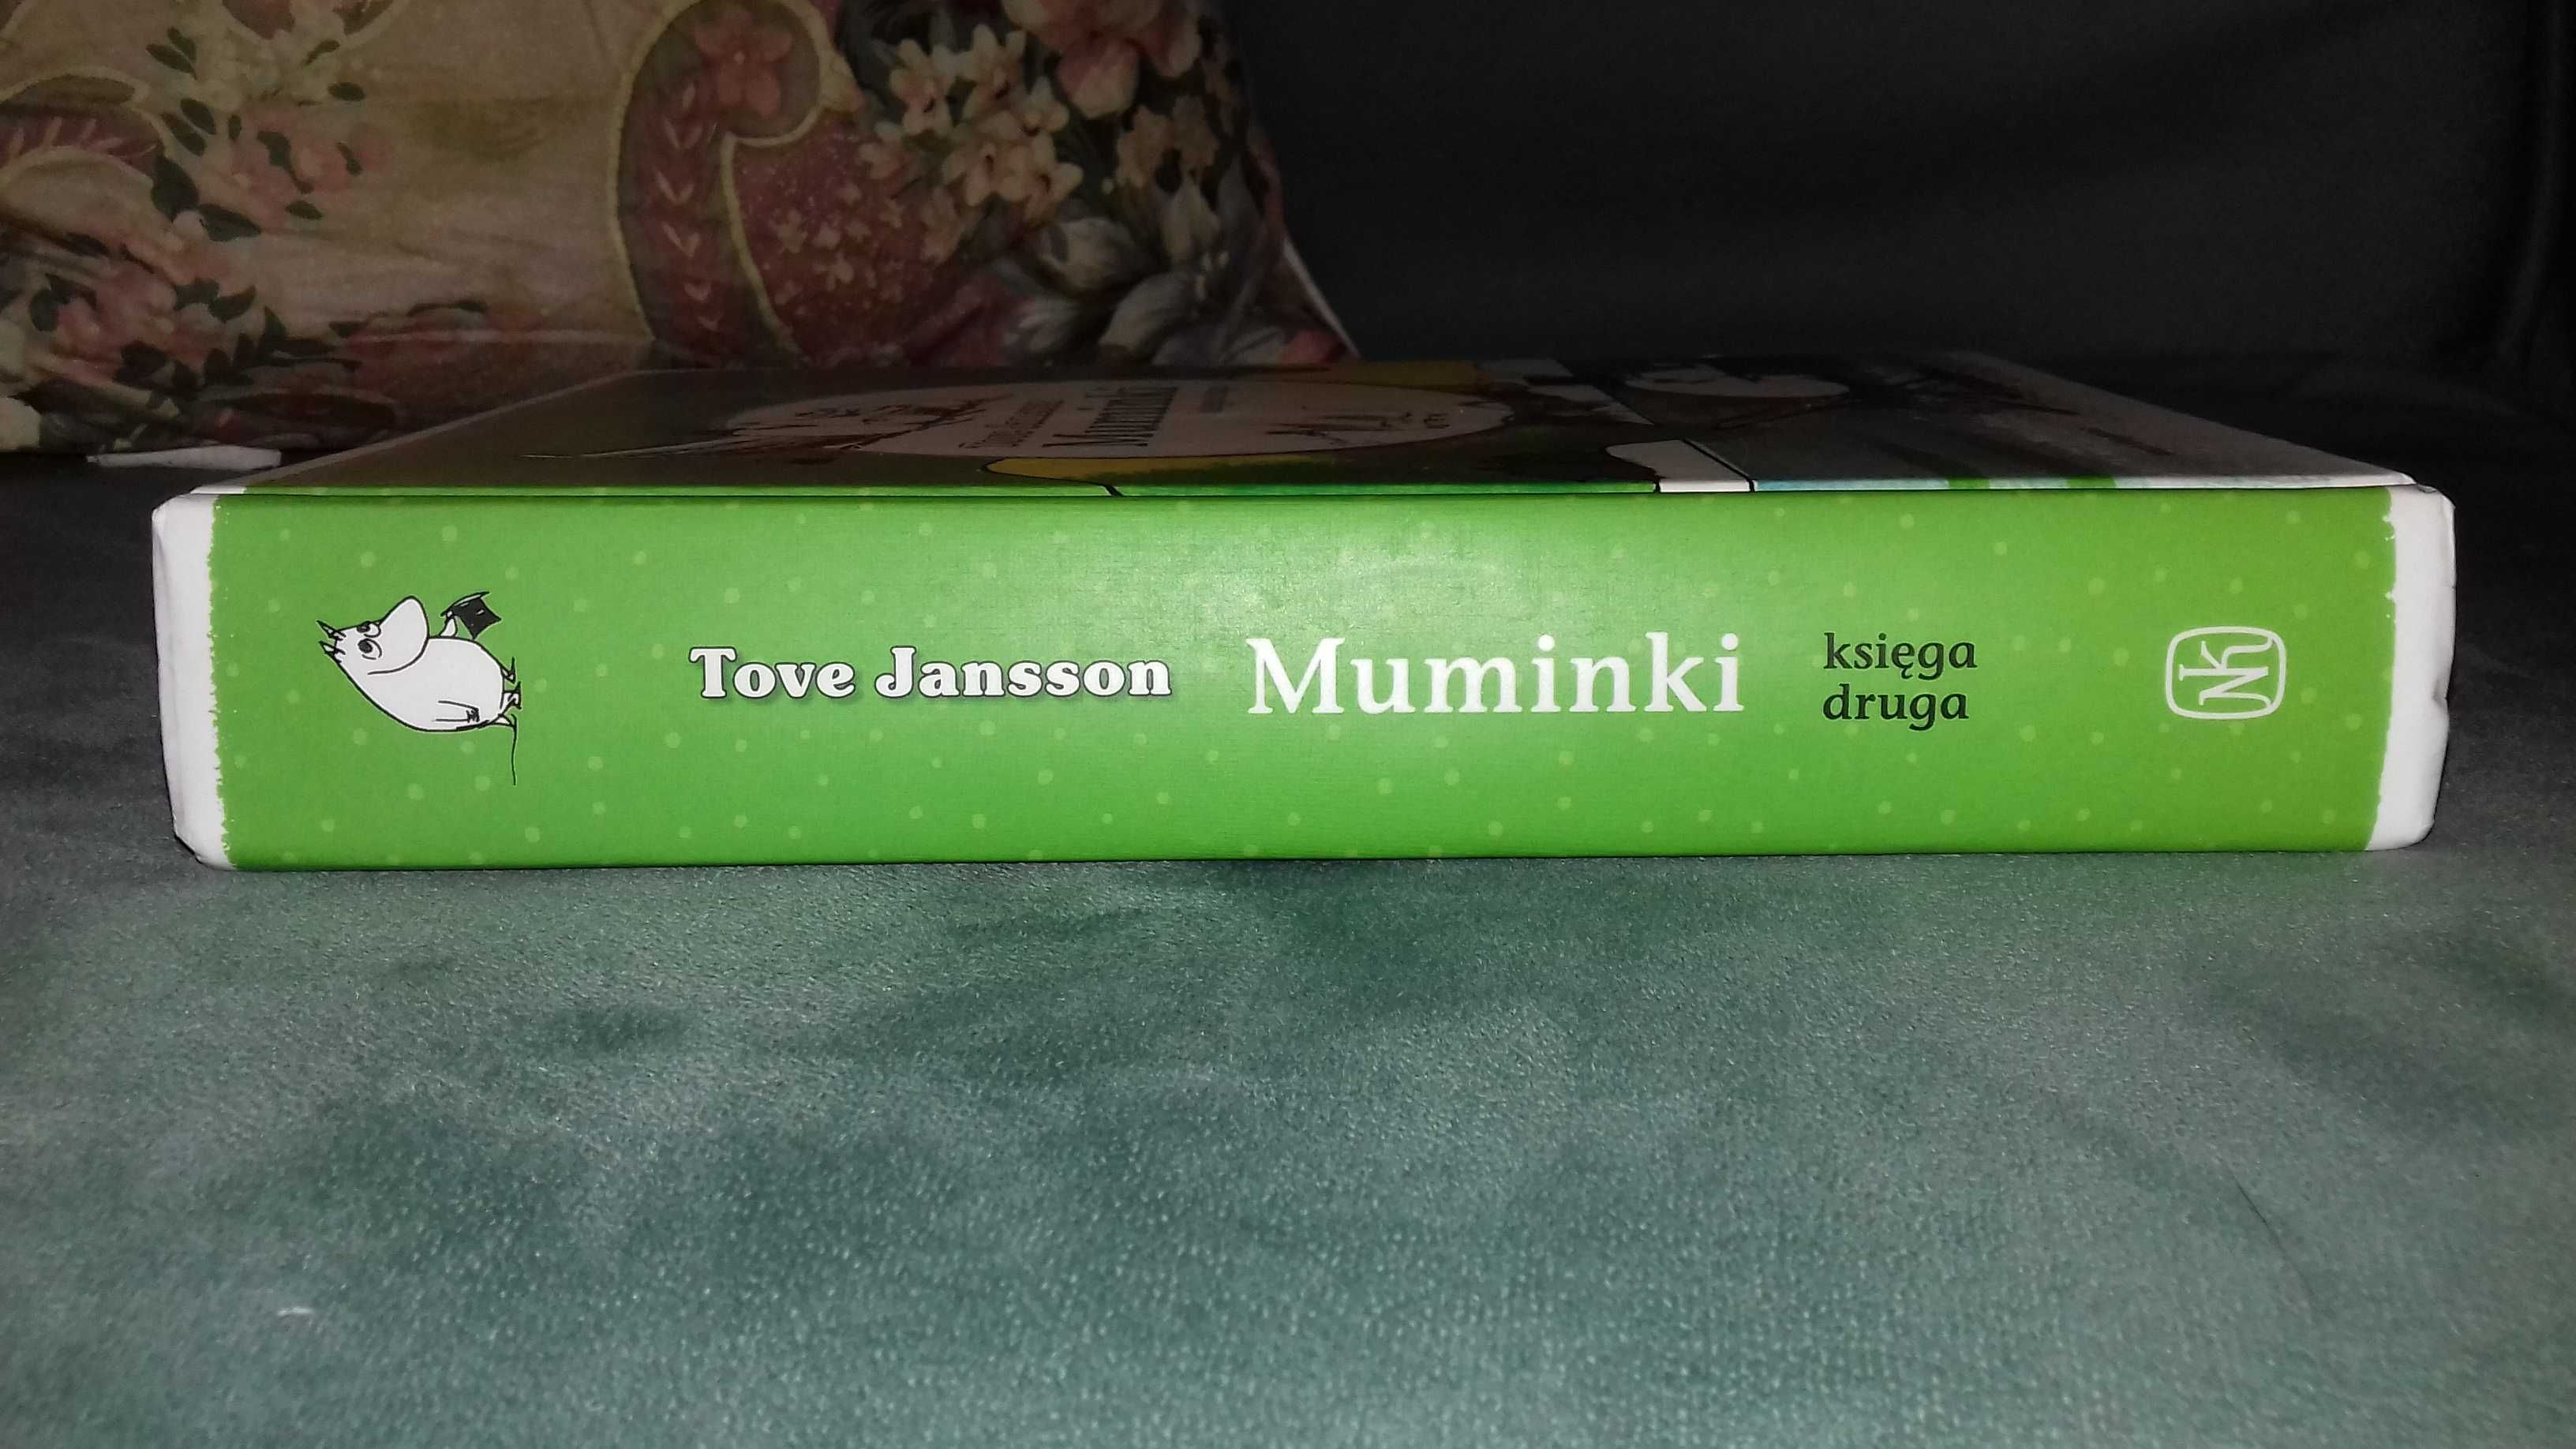 Tove Jansson - Muminki Księga druga 2